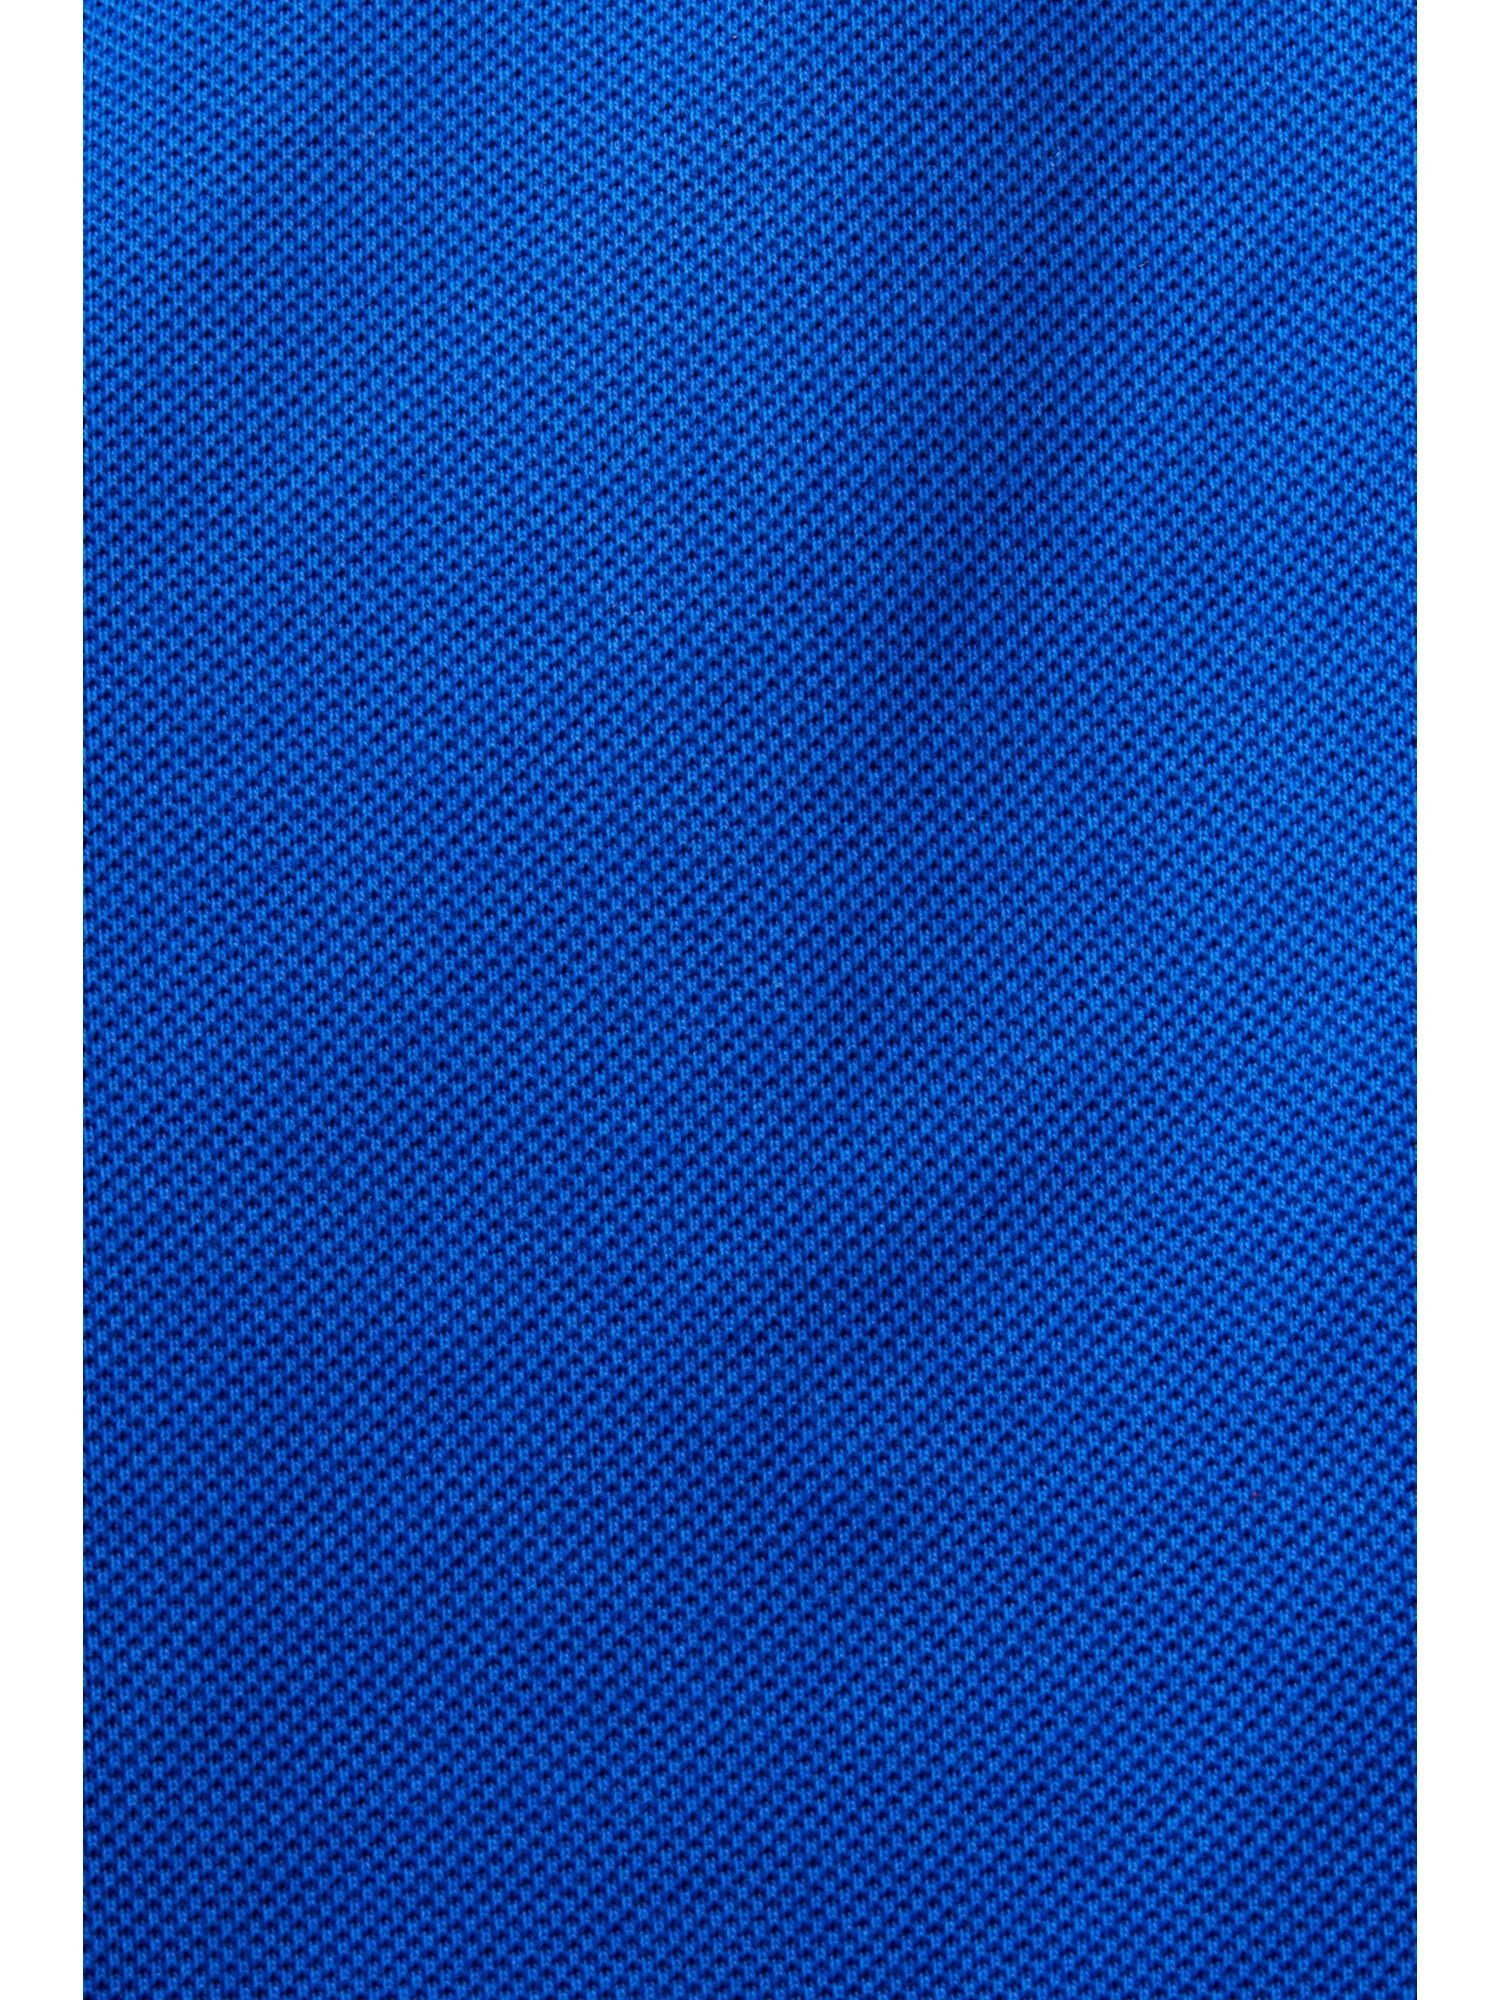 Stoffhose aus BRIGHT Piqué-Jersey geschnittene BLUE Esprit Hose Gerade